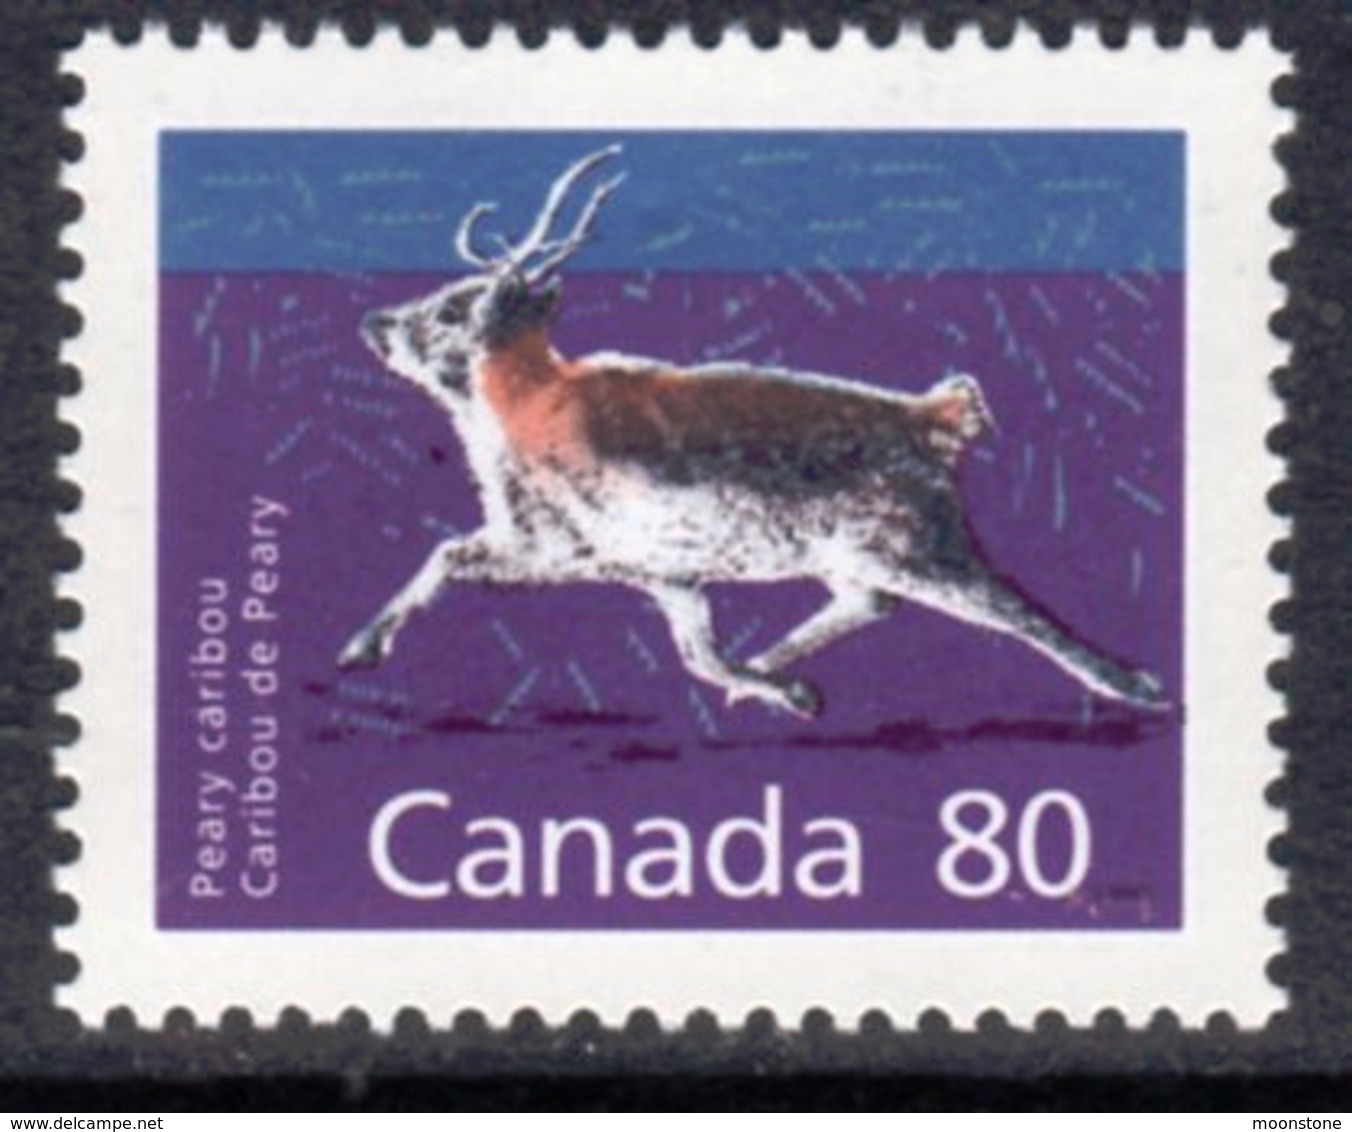 Canada 1988-93 Mammals Definitives 80c Peary Caribou Value, MNH, SG 1276c - Nuevos